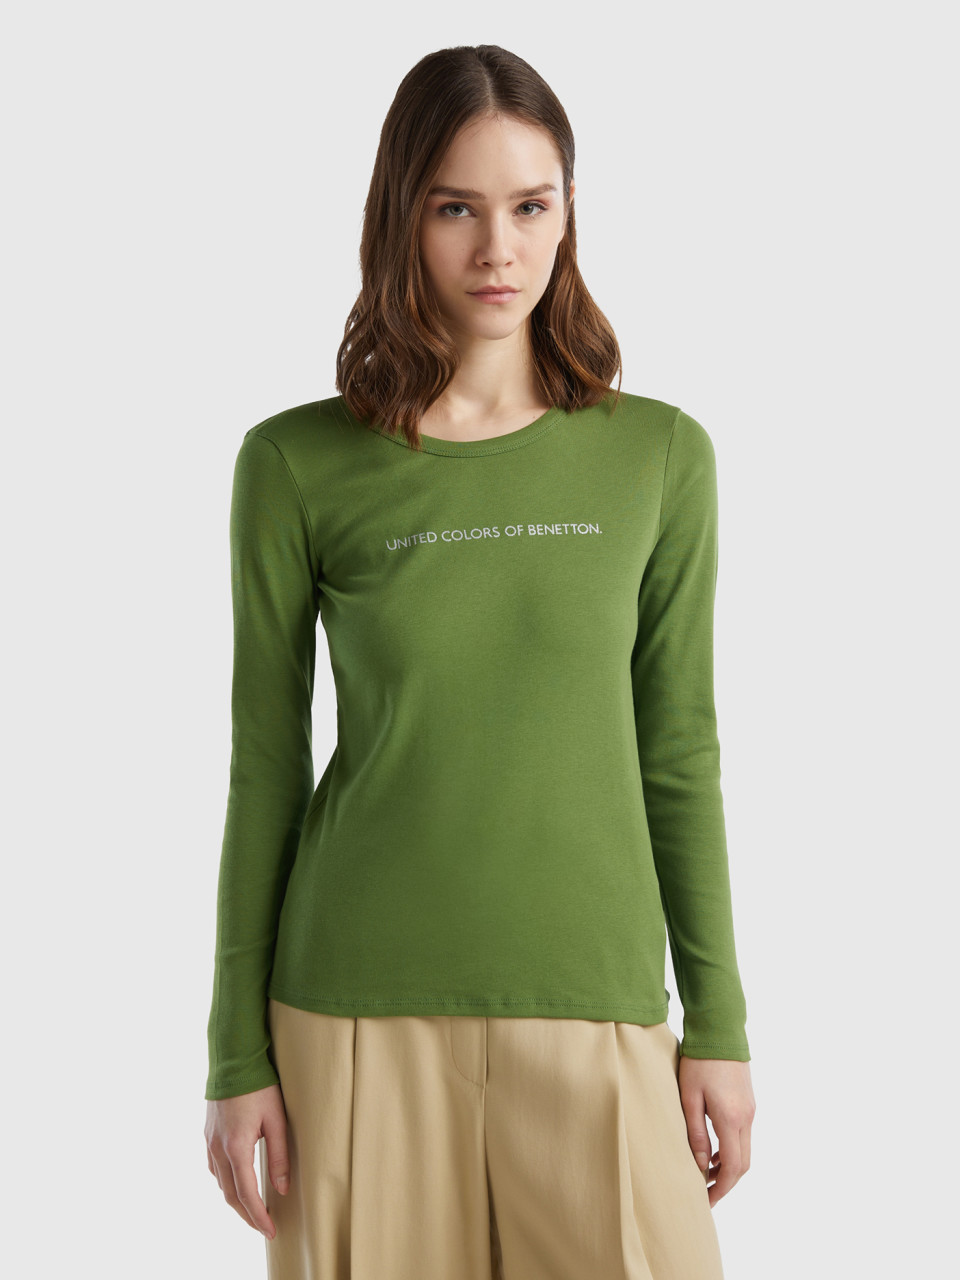 Benetton, Military Green 100% Cotton Long Sleeve T-shirt, Military Green, Women